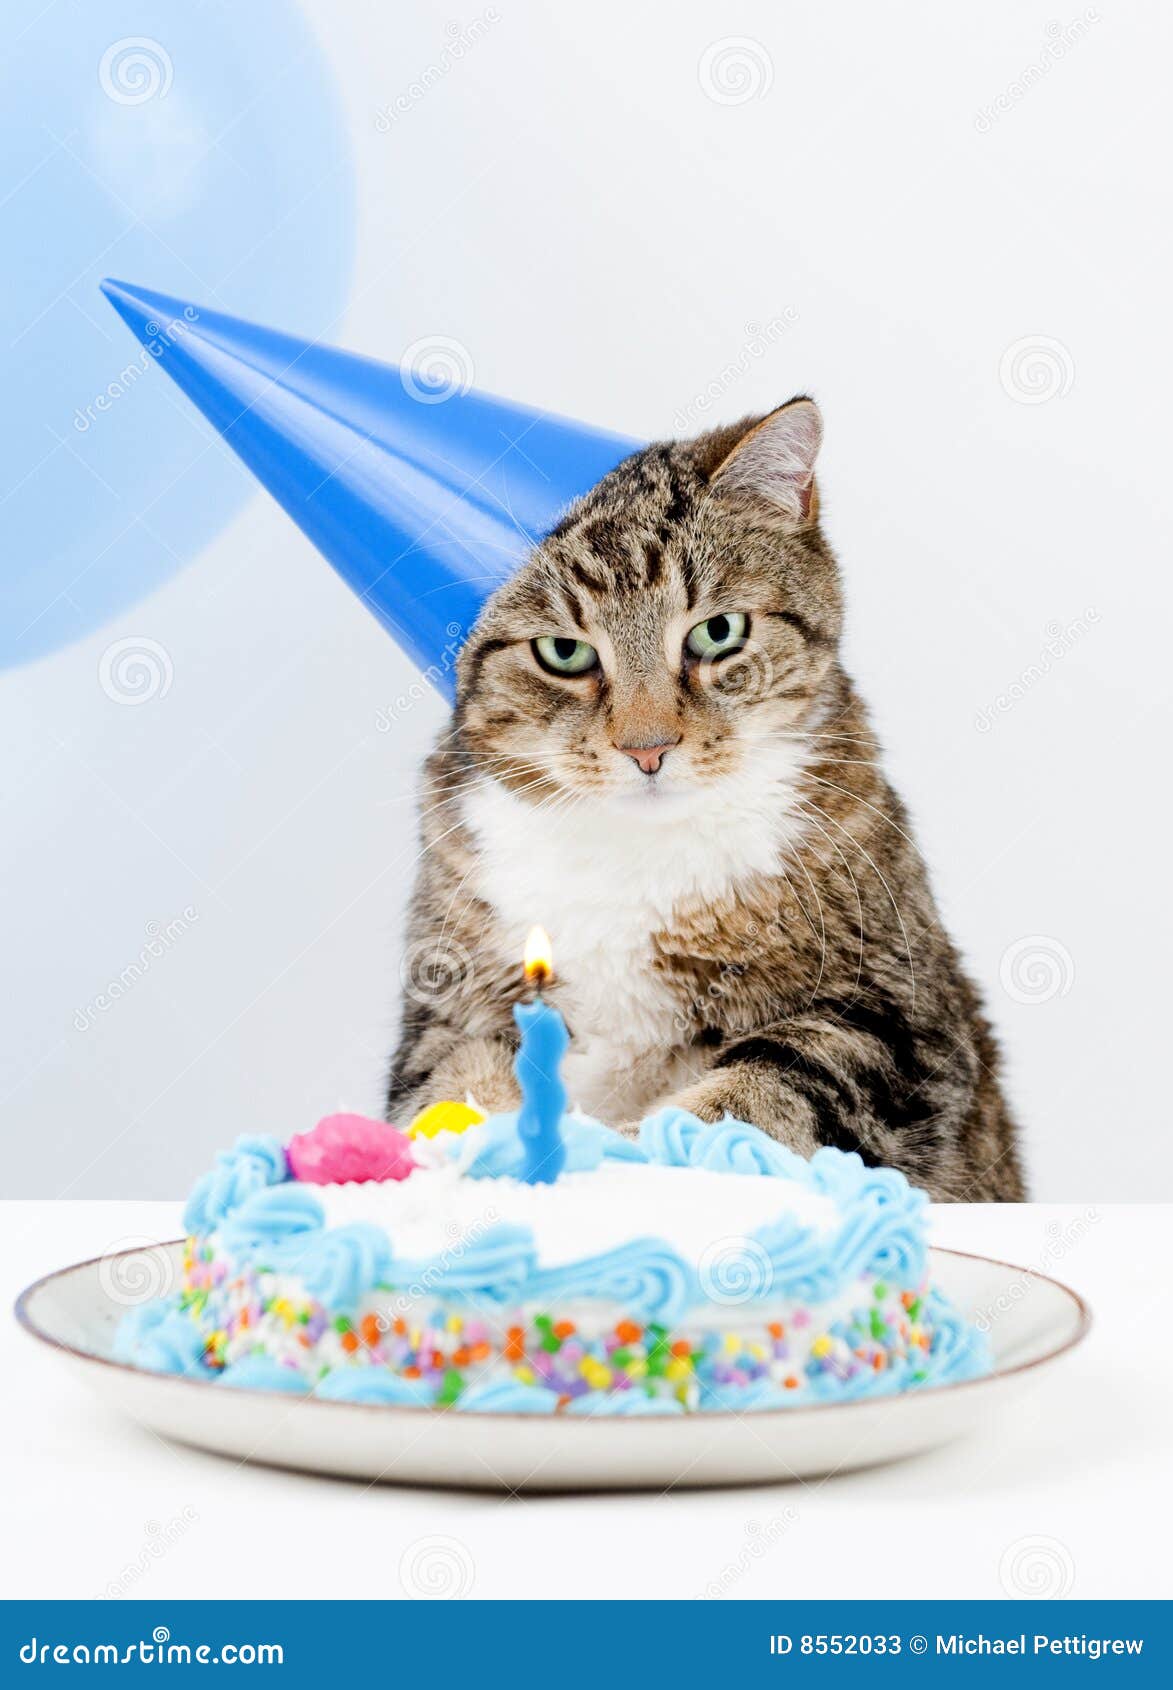 clipart birthday cat - photo #29